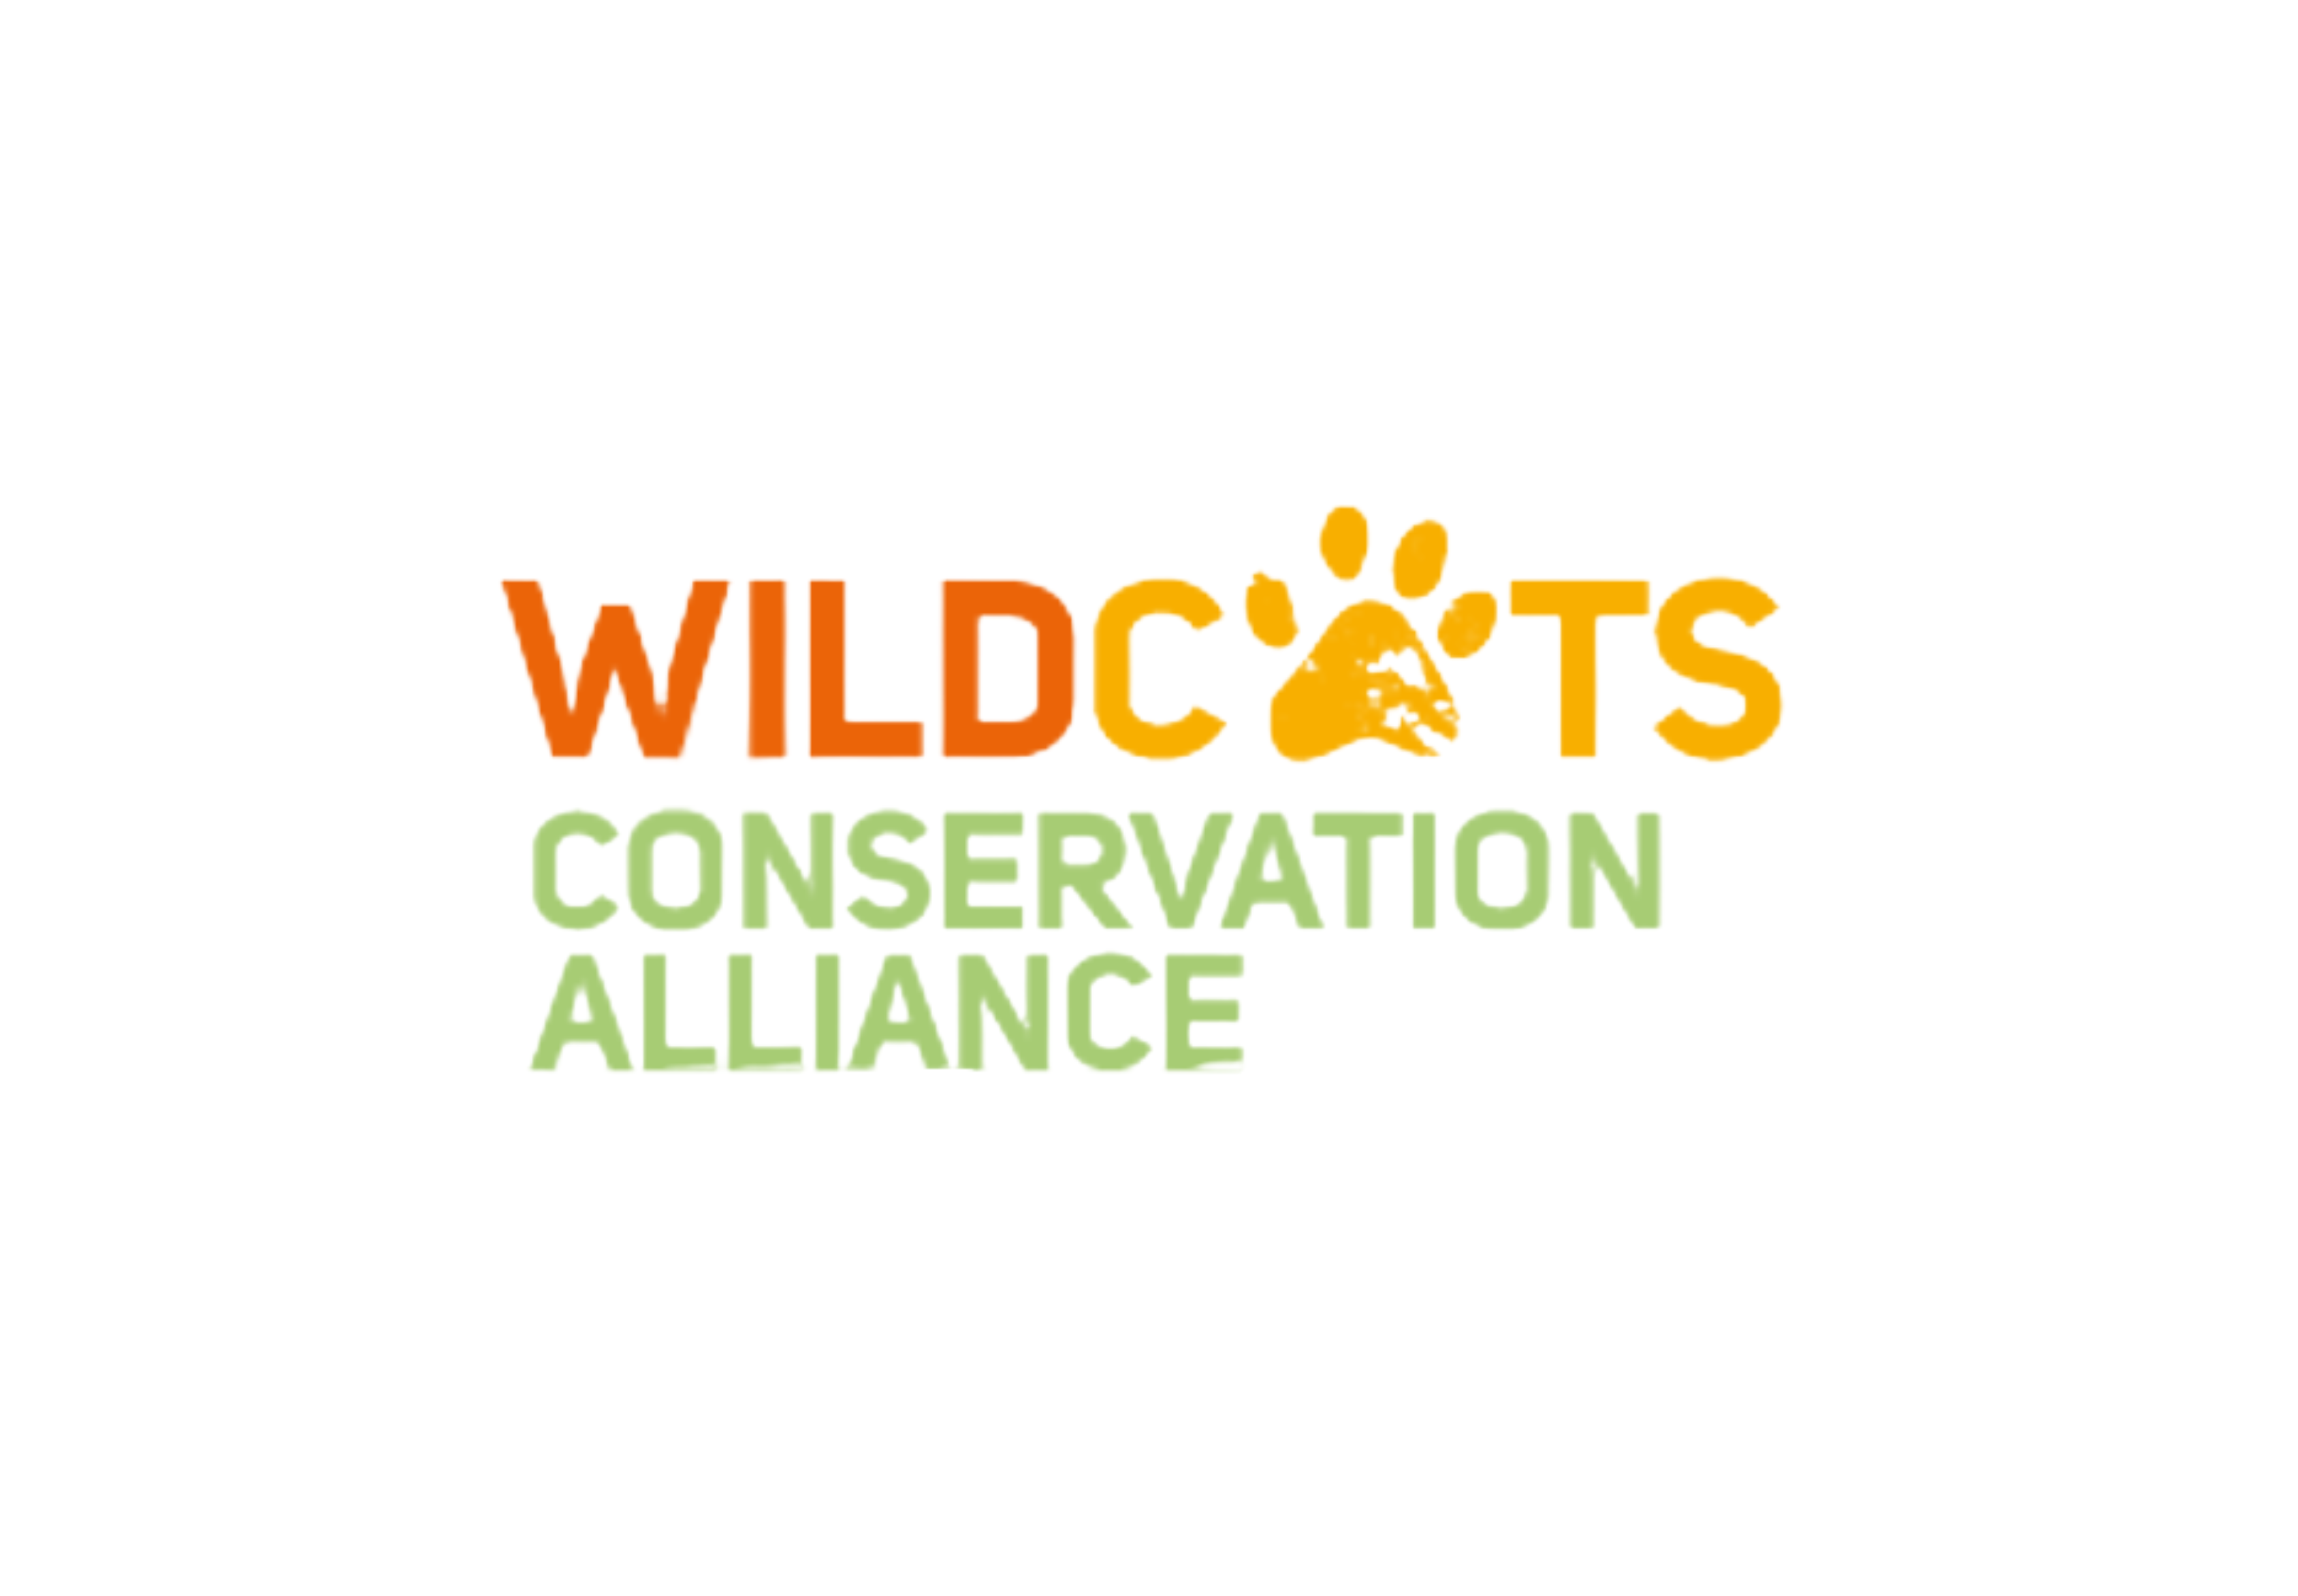 WILD CATS CONSERVATION ALLIANCE